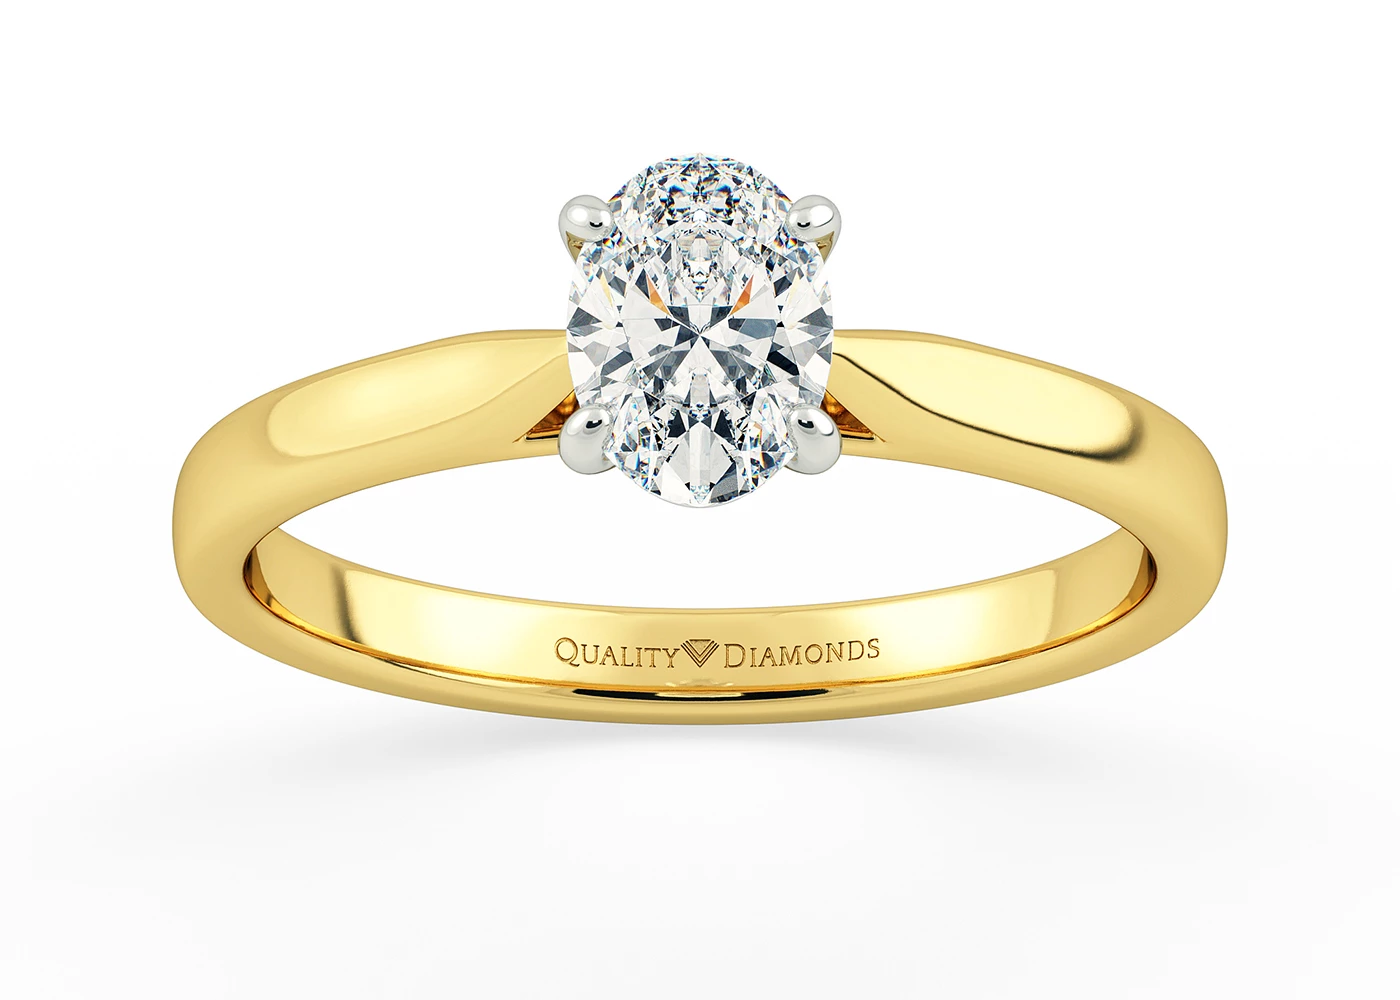 Oval Clara Diamond Ring in 18K Yellow Gold